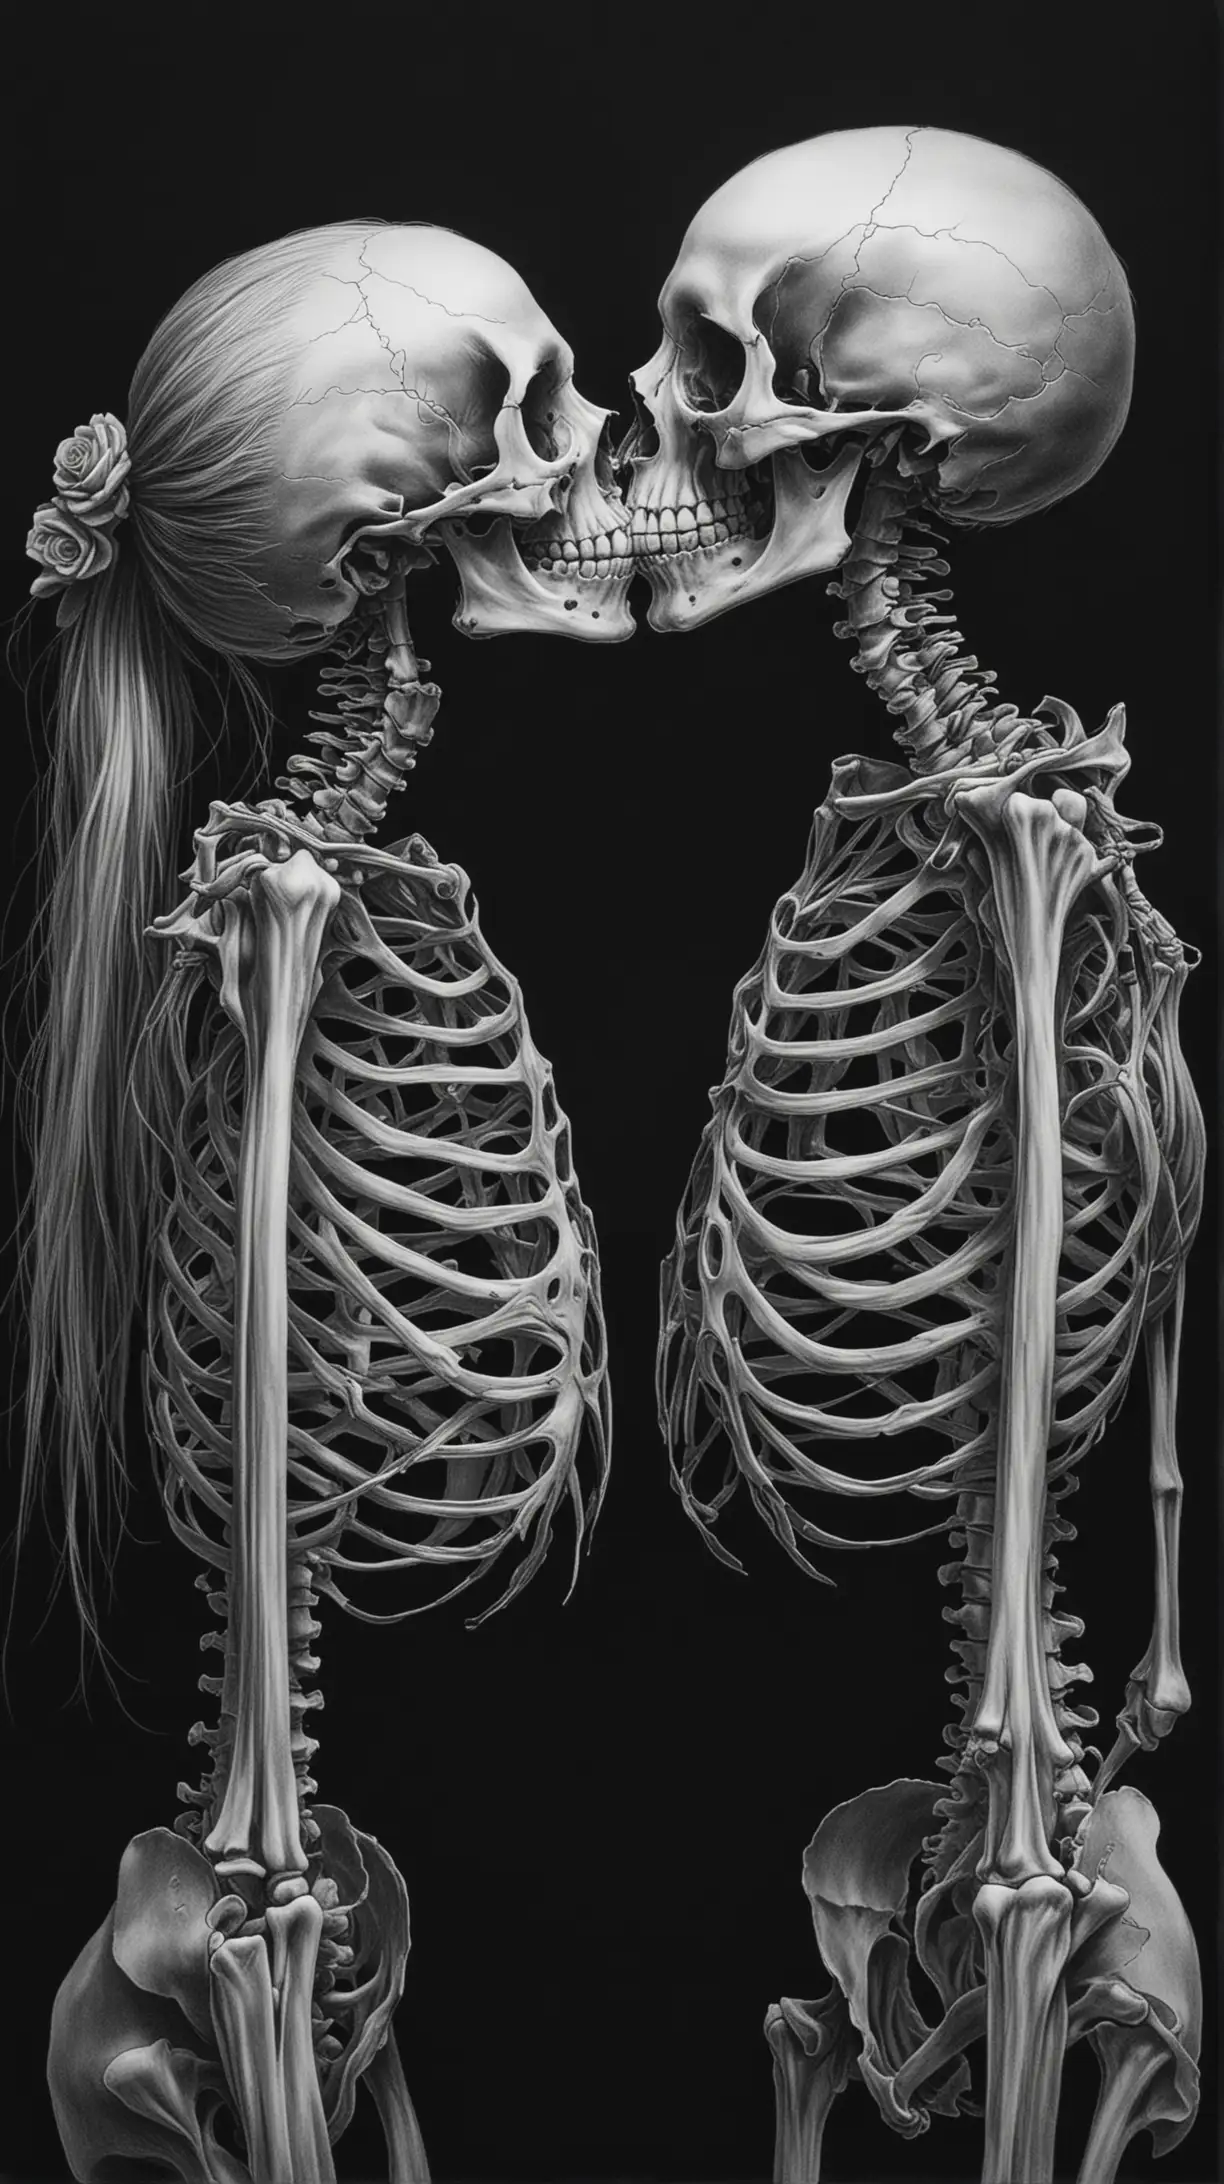 Romantic Skeletons Kissing in the Dark